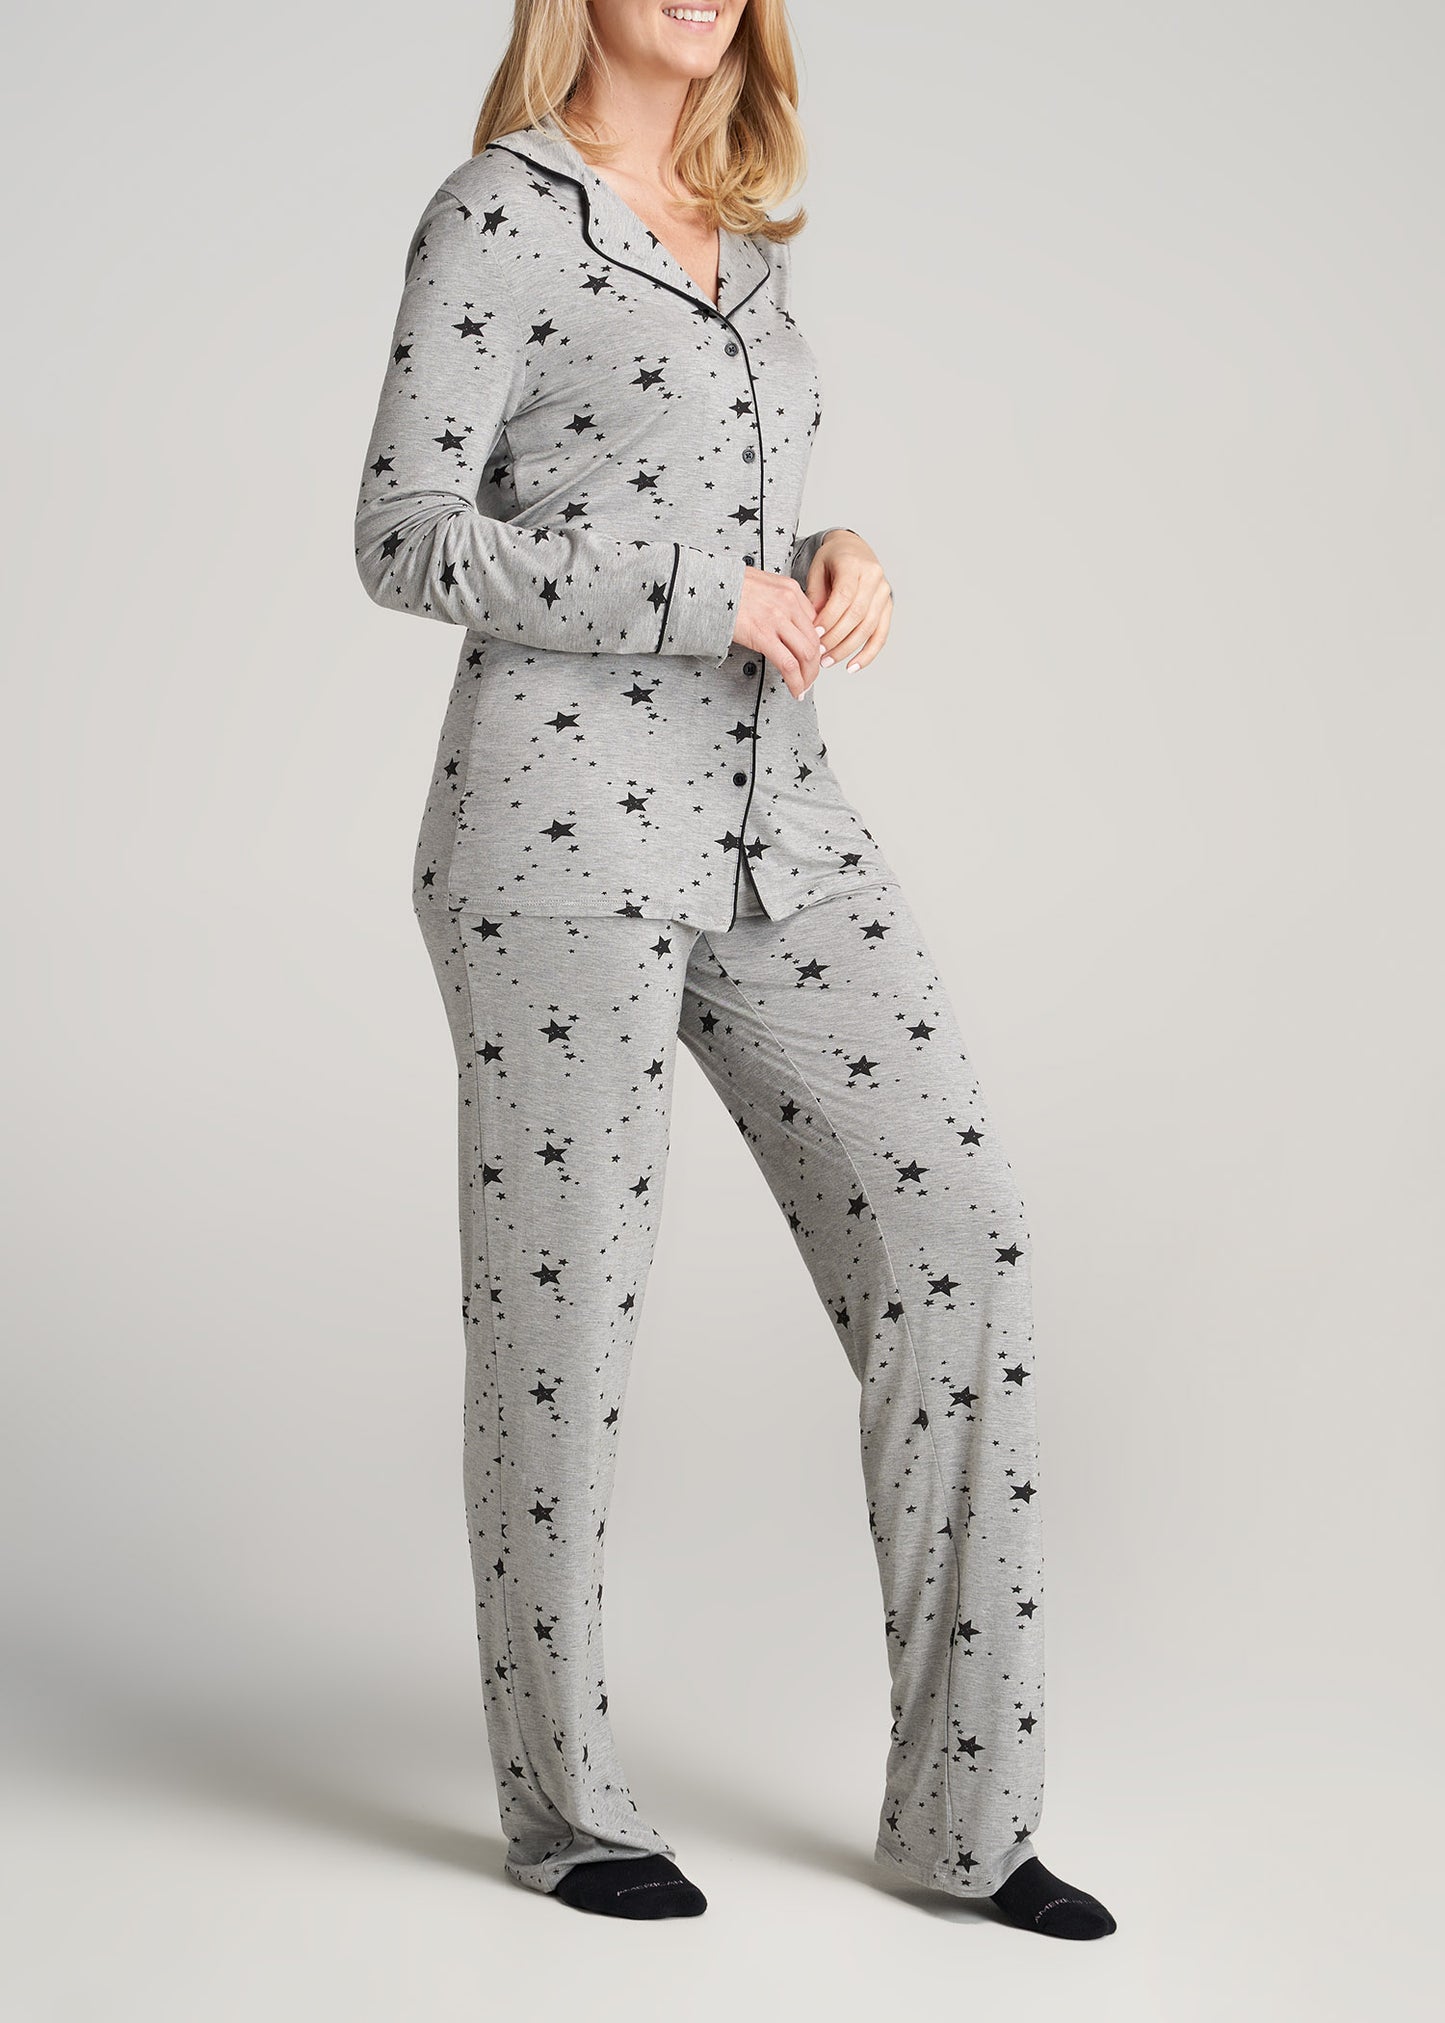     American-Tall-Women-LongSleeve-PajamaSet-GreyBlackStarPrint-side